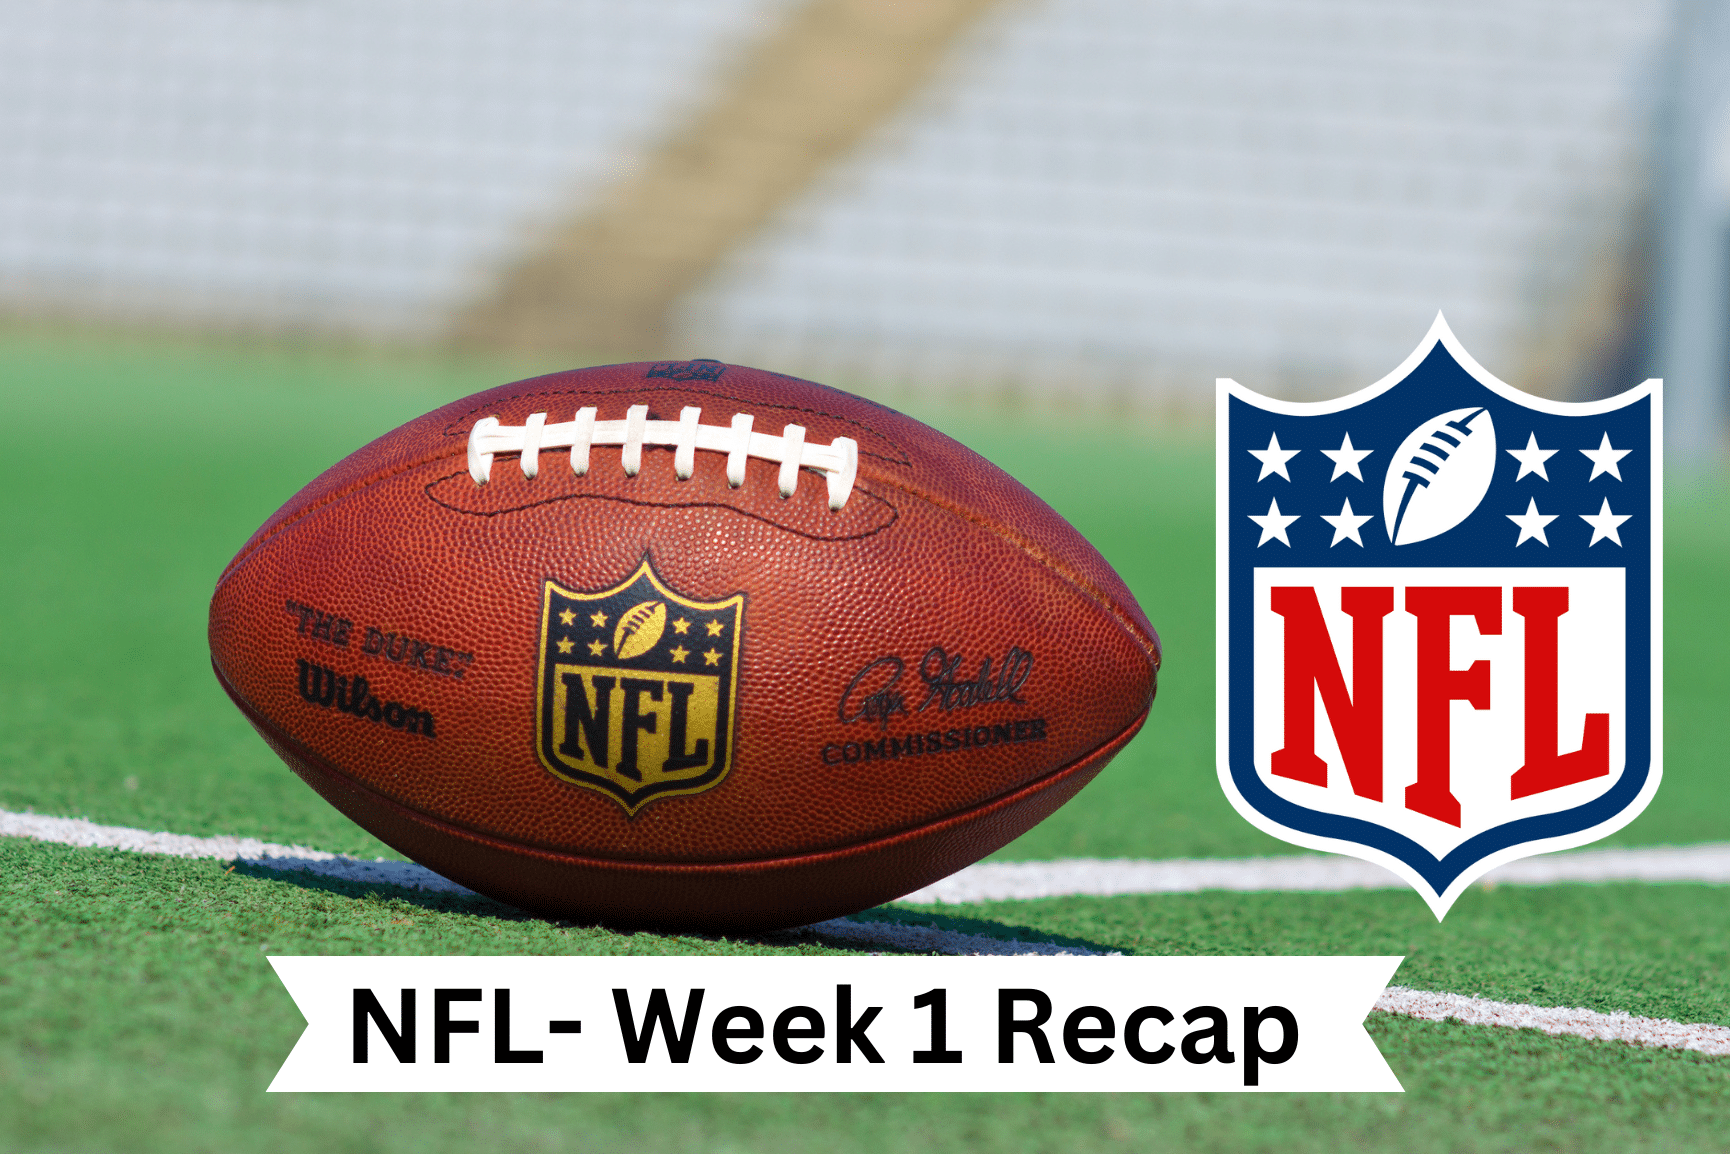 NFL Week 1 Scores, Highlights and Recap